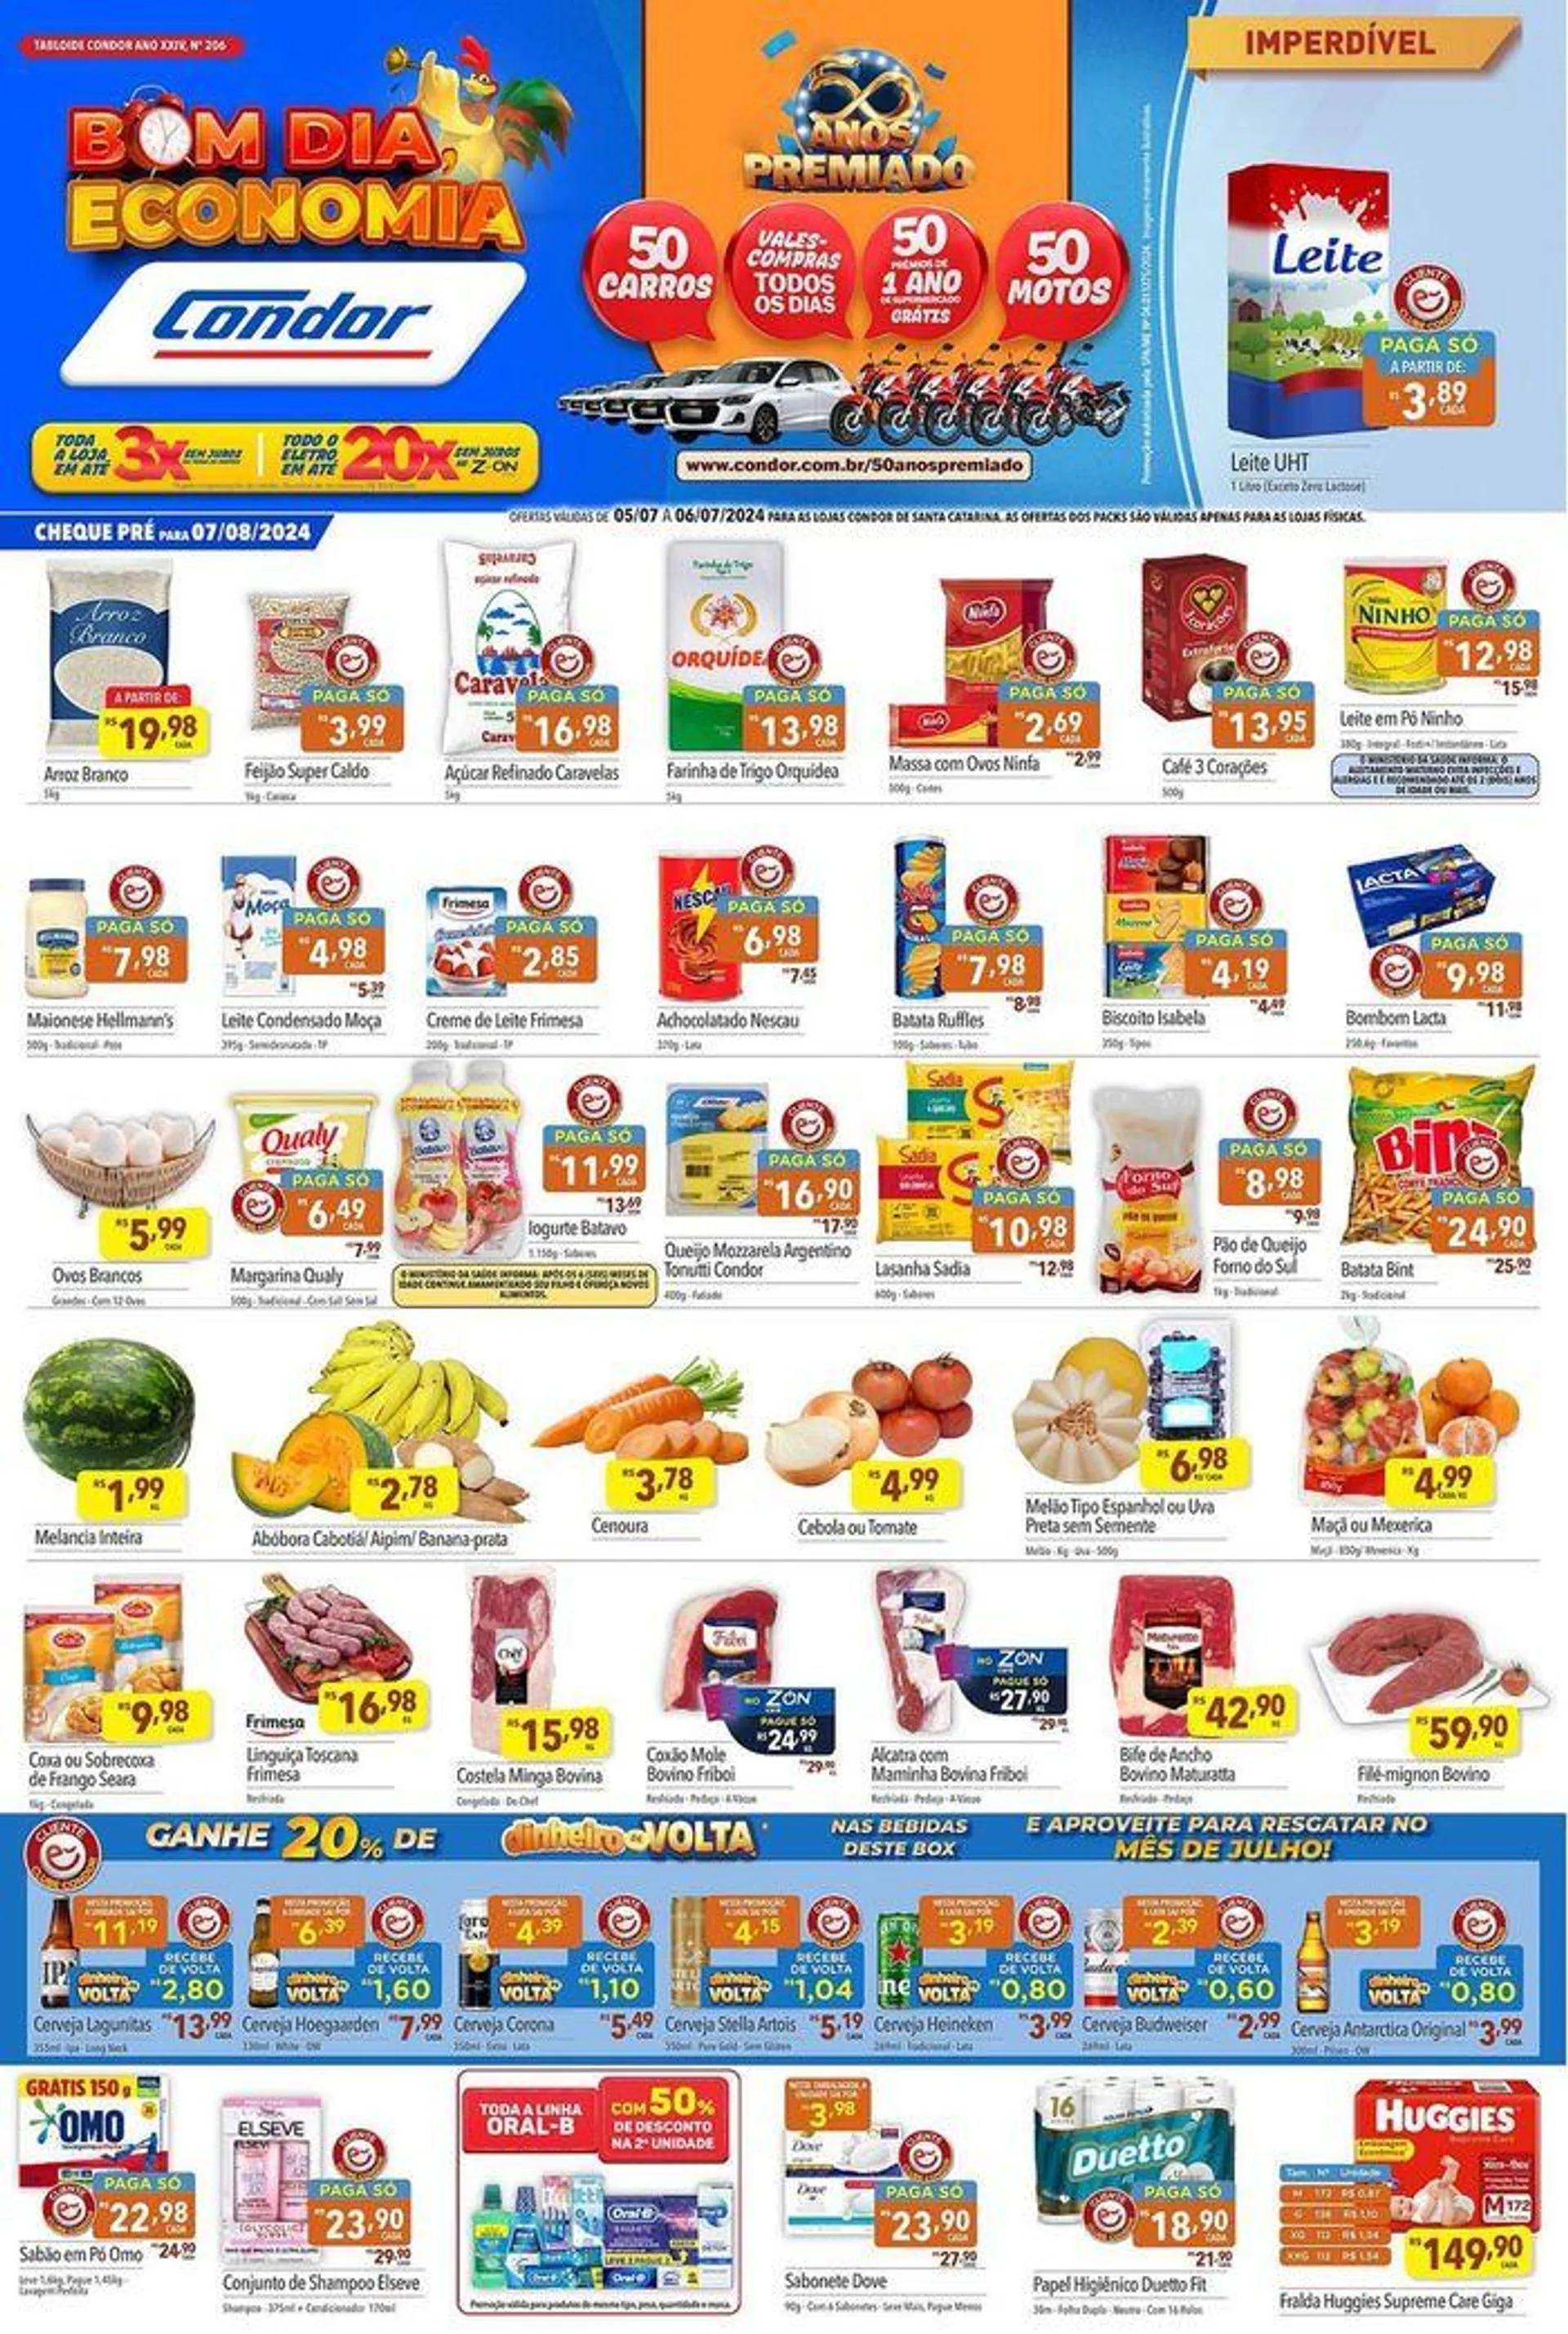 Ofertas Supermercados Condor - 1